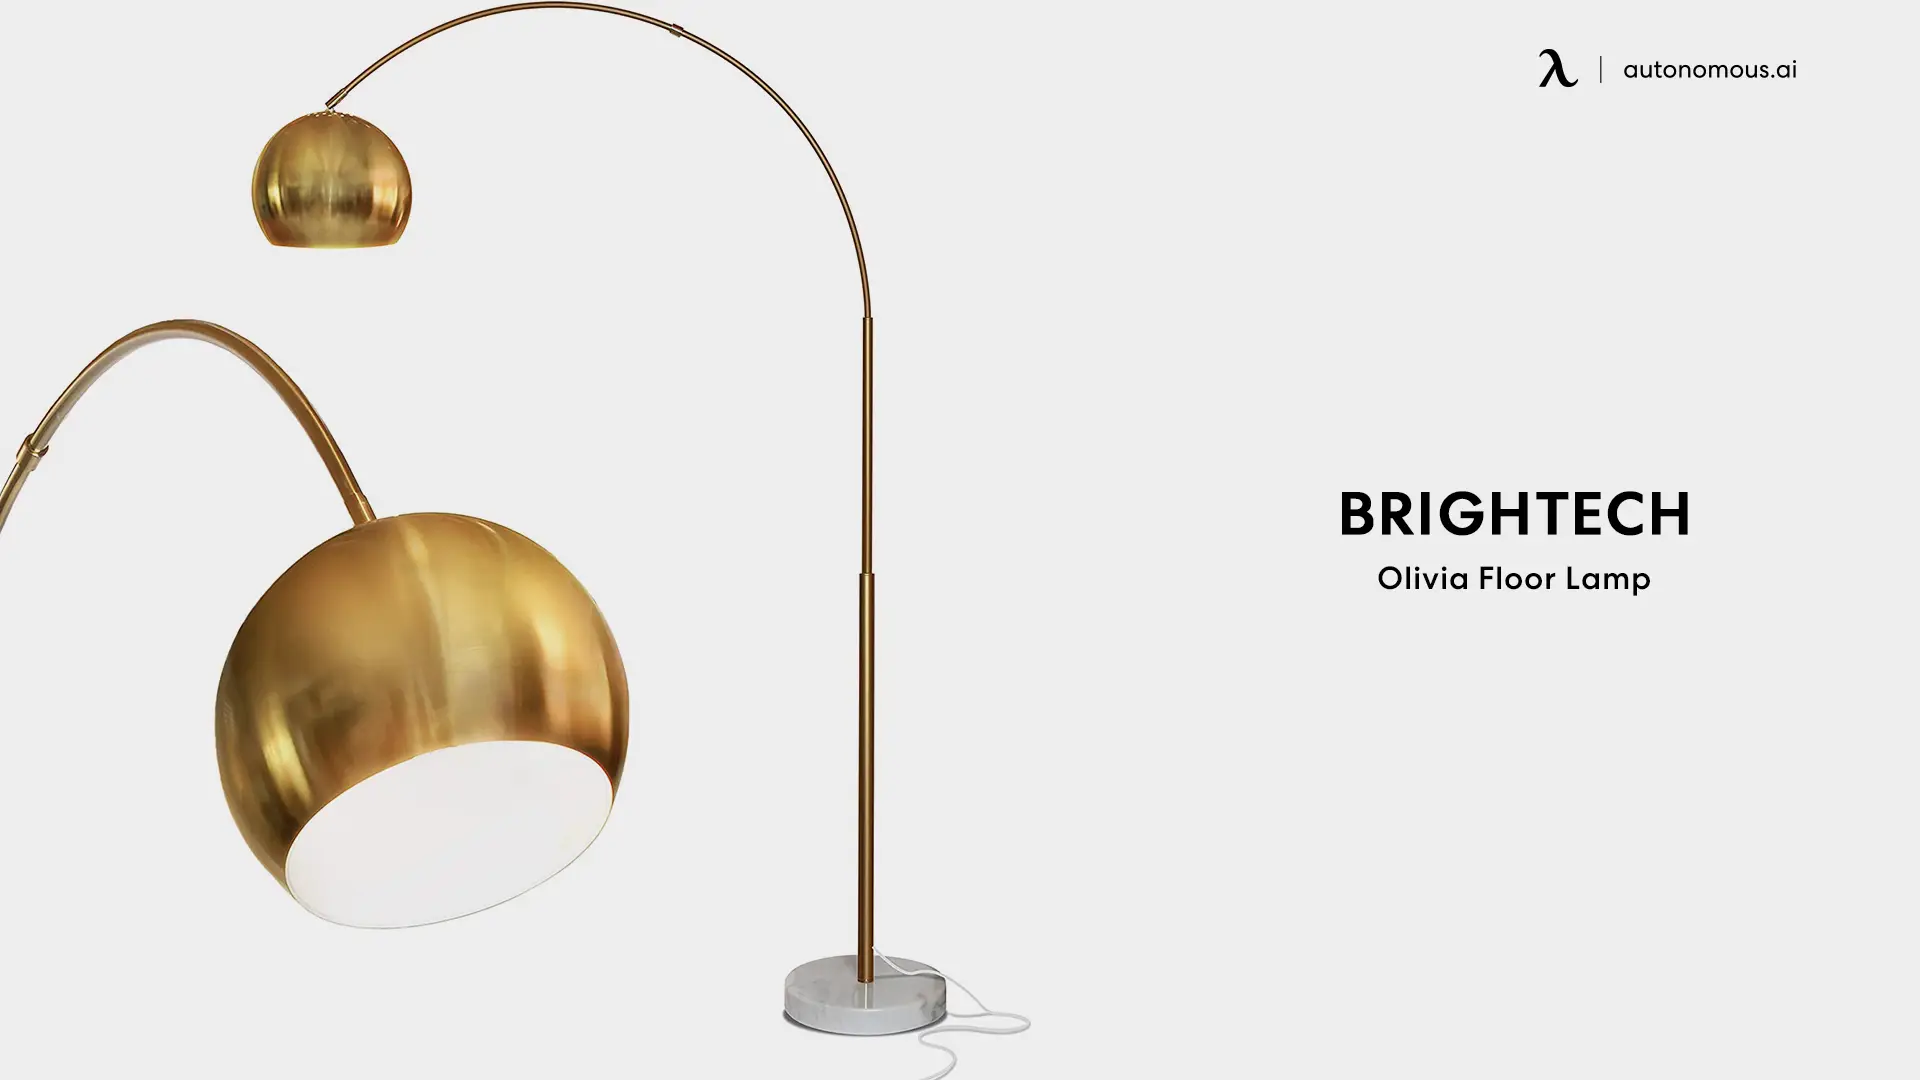 Olivia Floor Lamp - brightech lamp